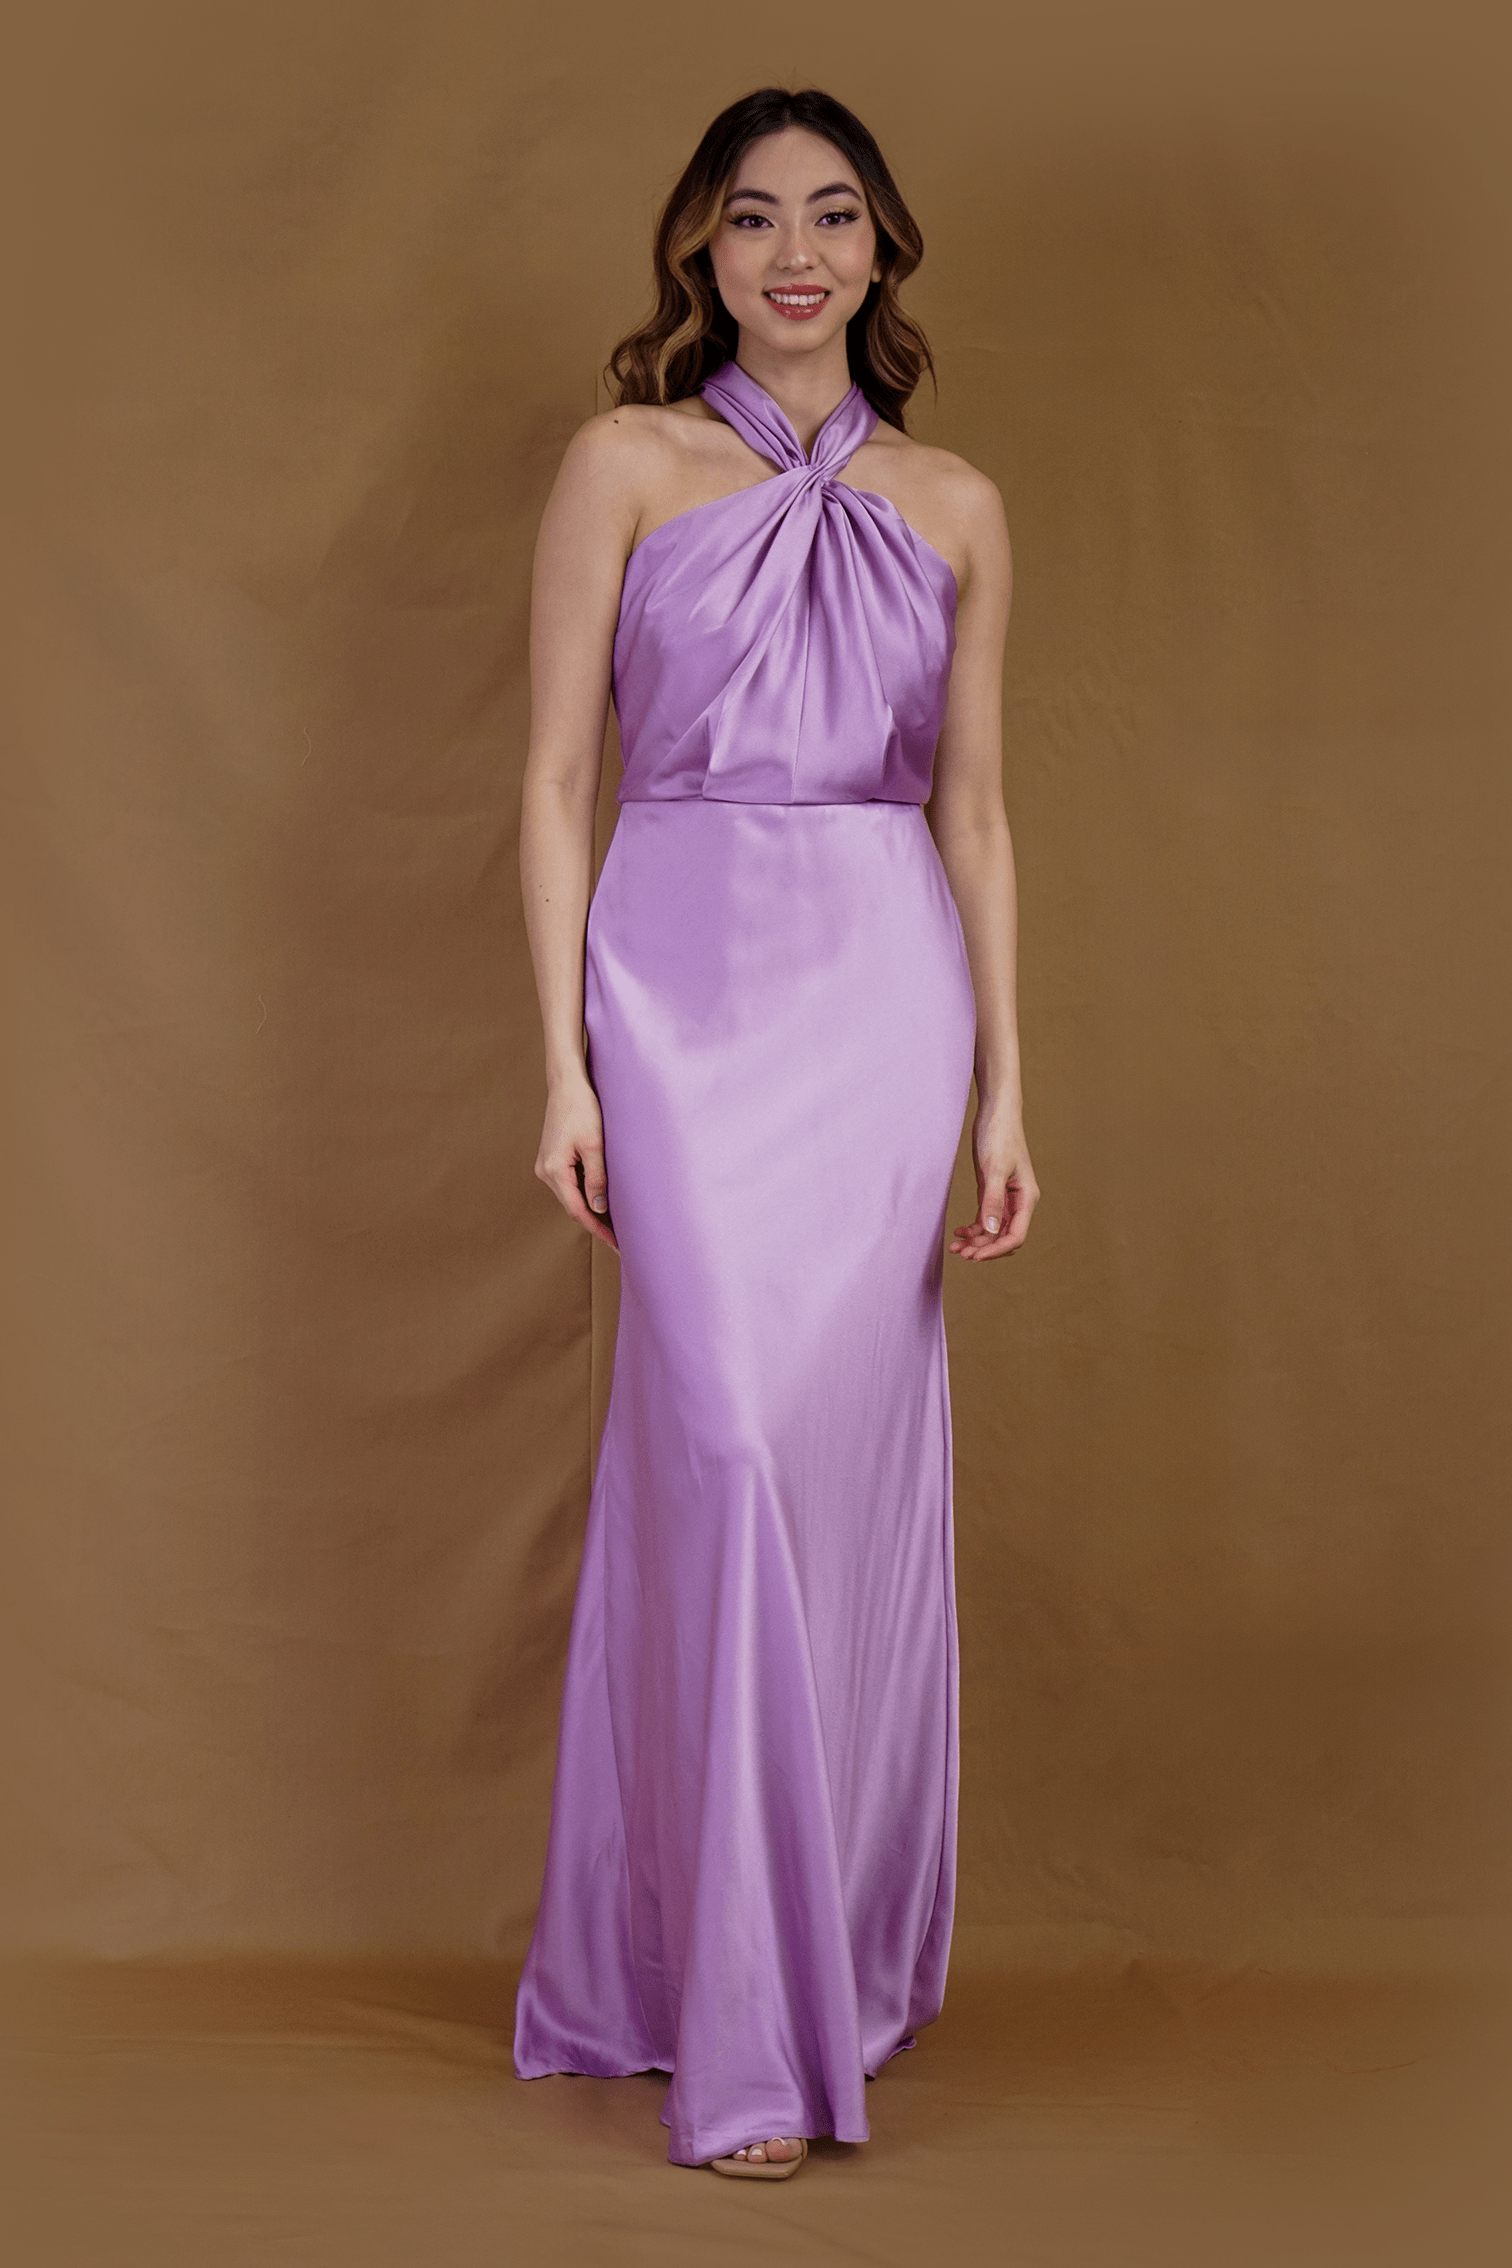 Chloe Dao Boutique GOWNS Lavender Halter Gown